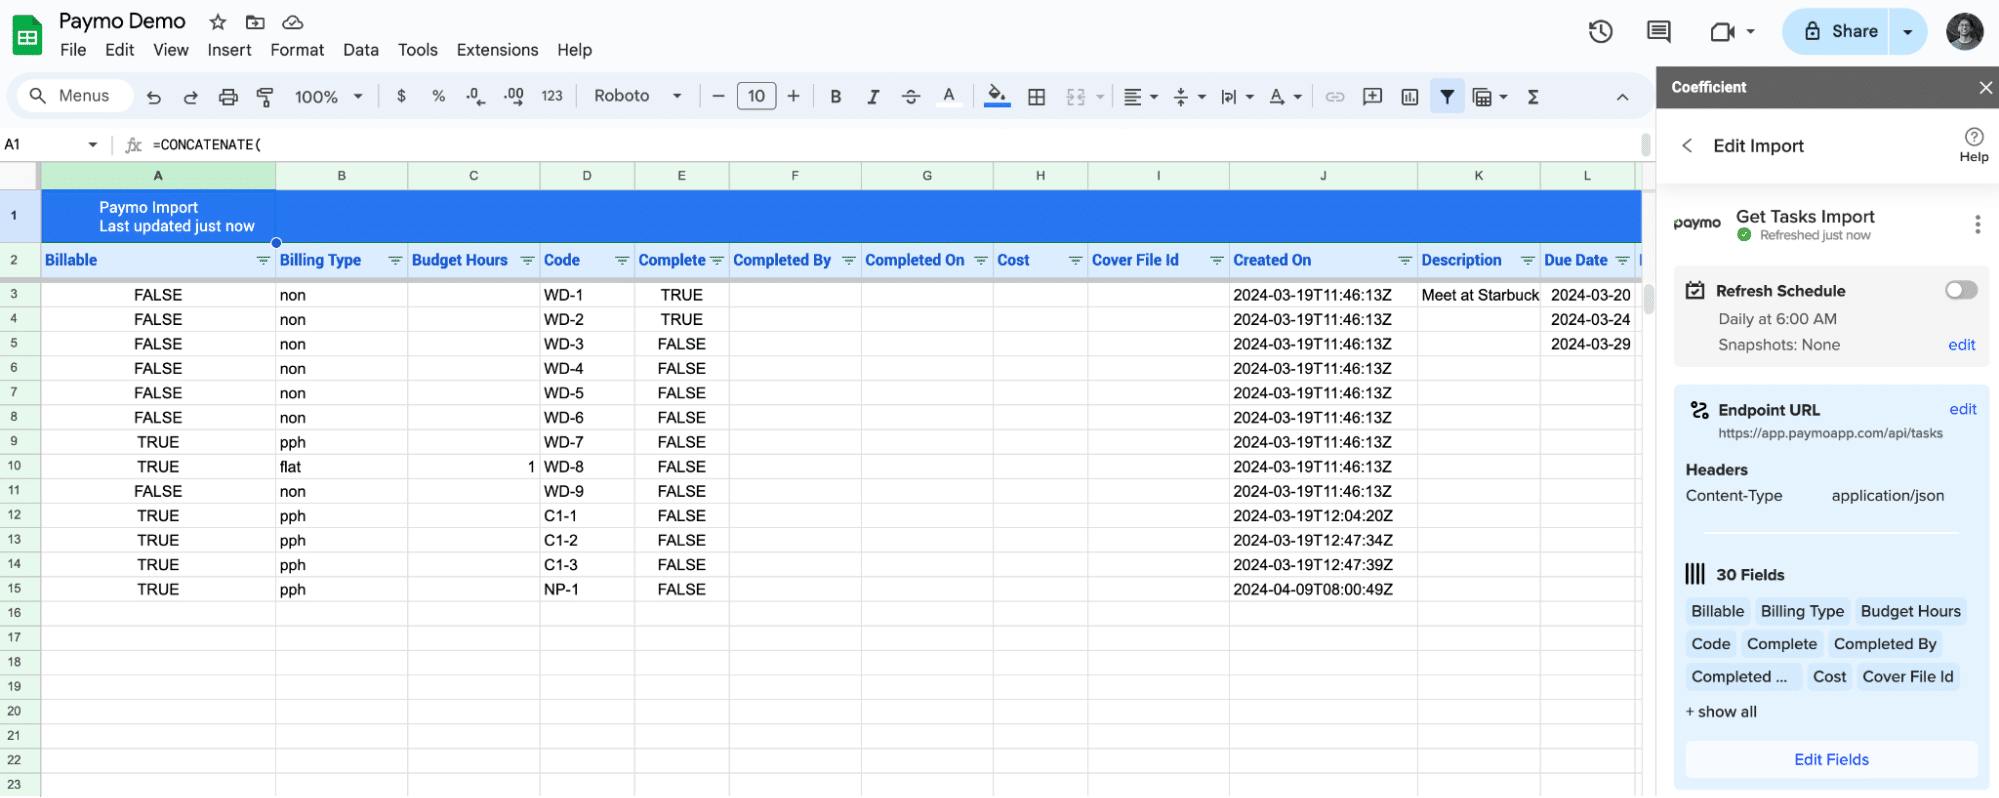 Paymo Tasks data in Google Sheets.